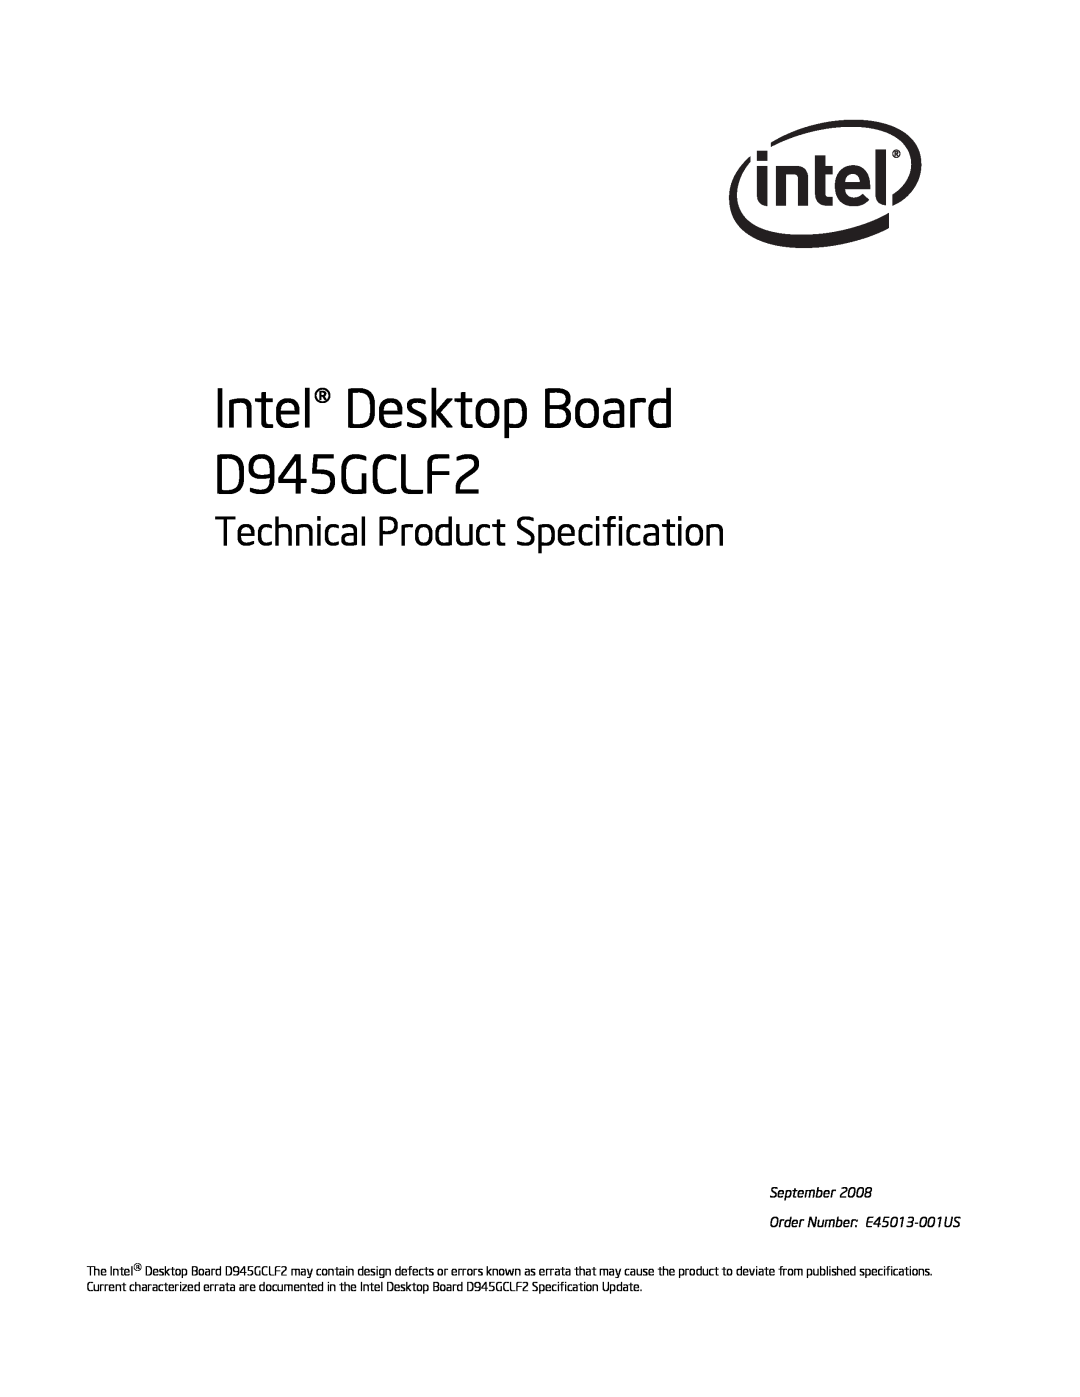 Intel specifications Intel Desktop Board D945GCLF2, Technical Product Specification 